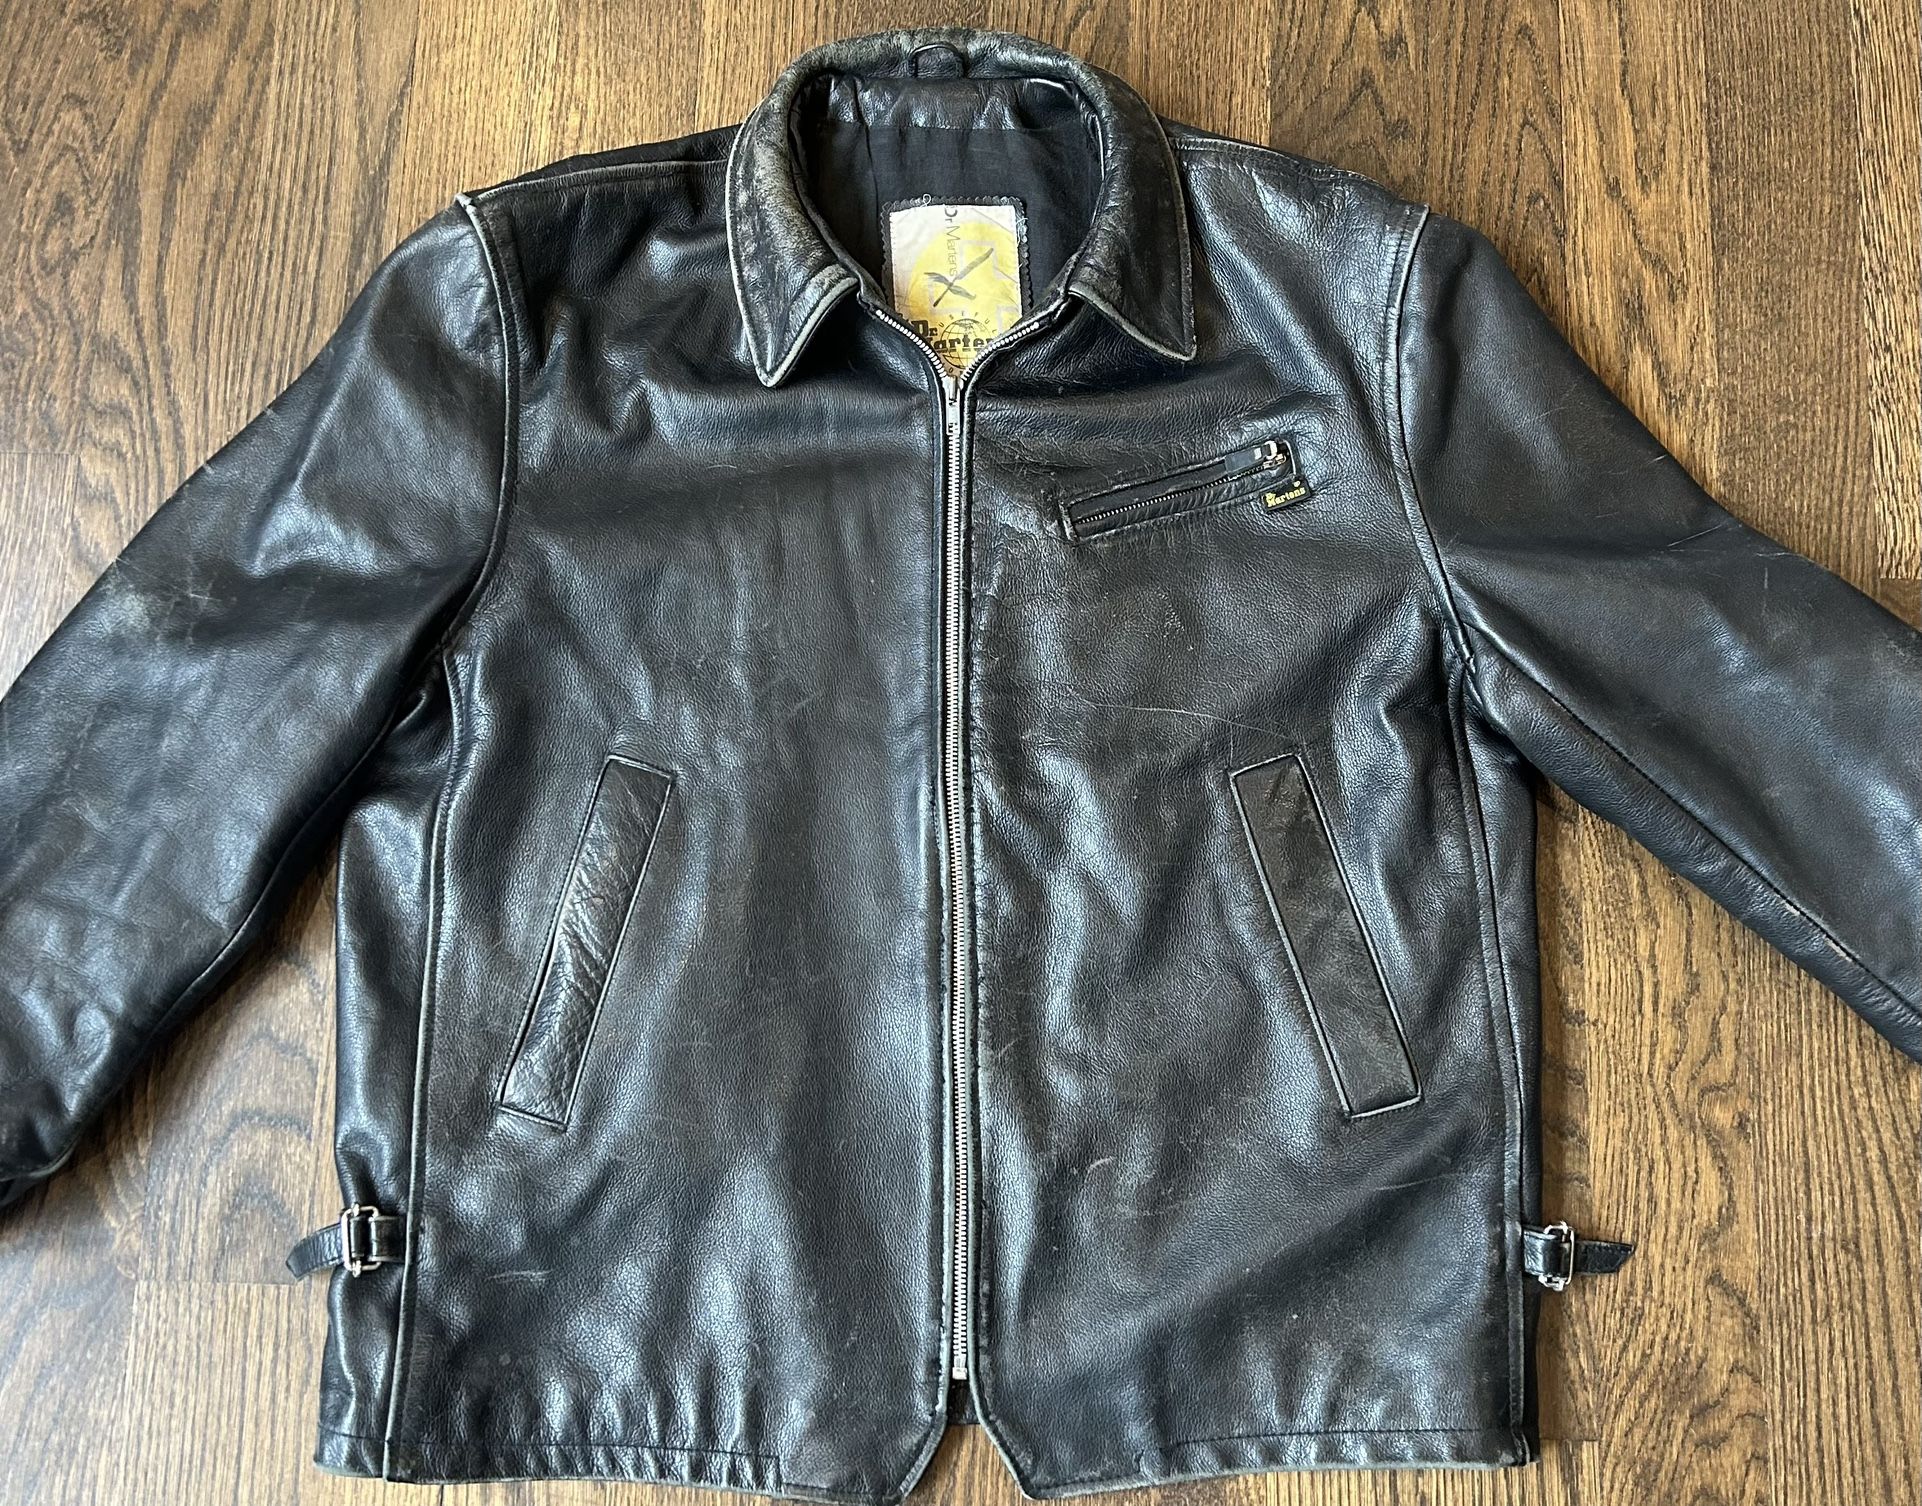 Dr. Martens Black Leather Motorcycle Jacket